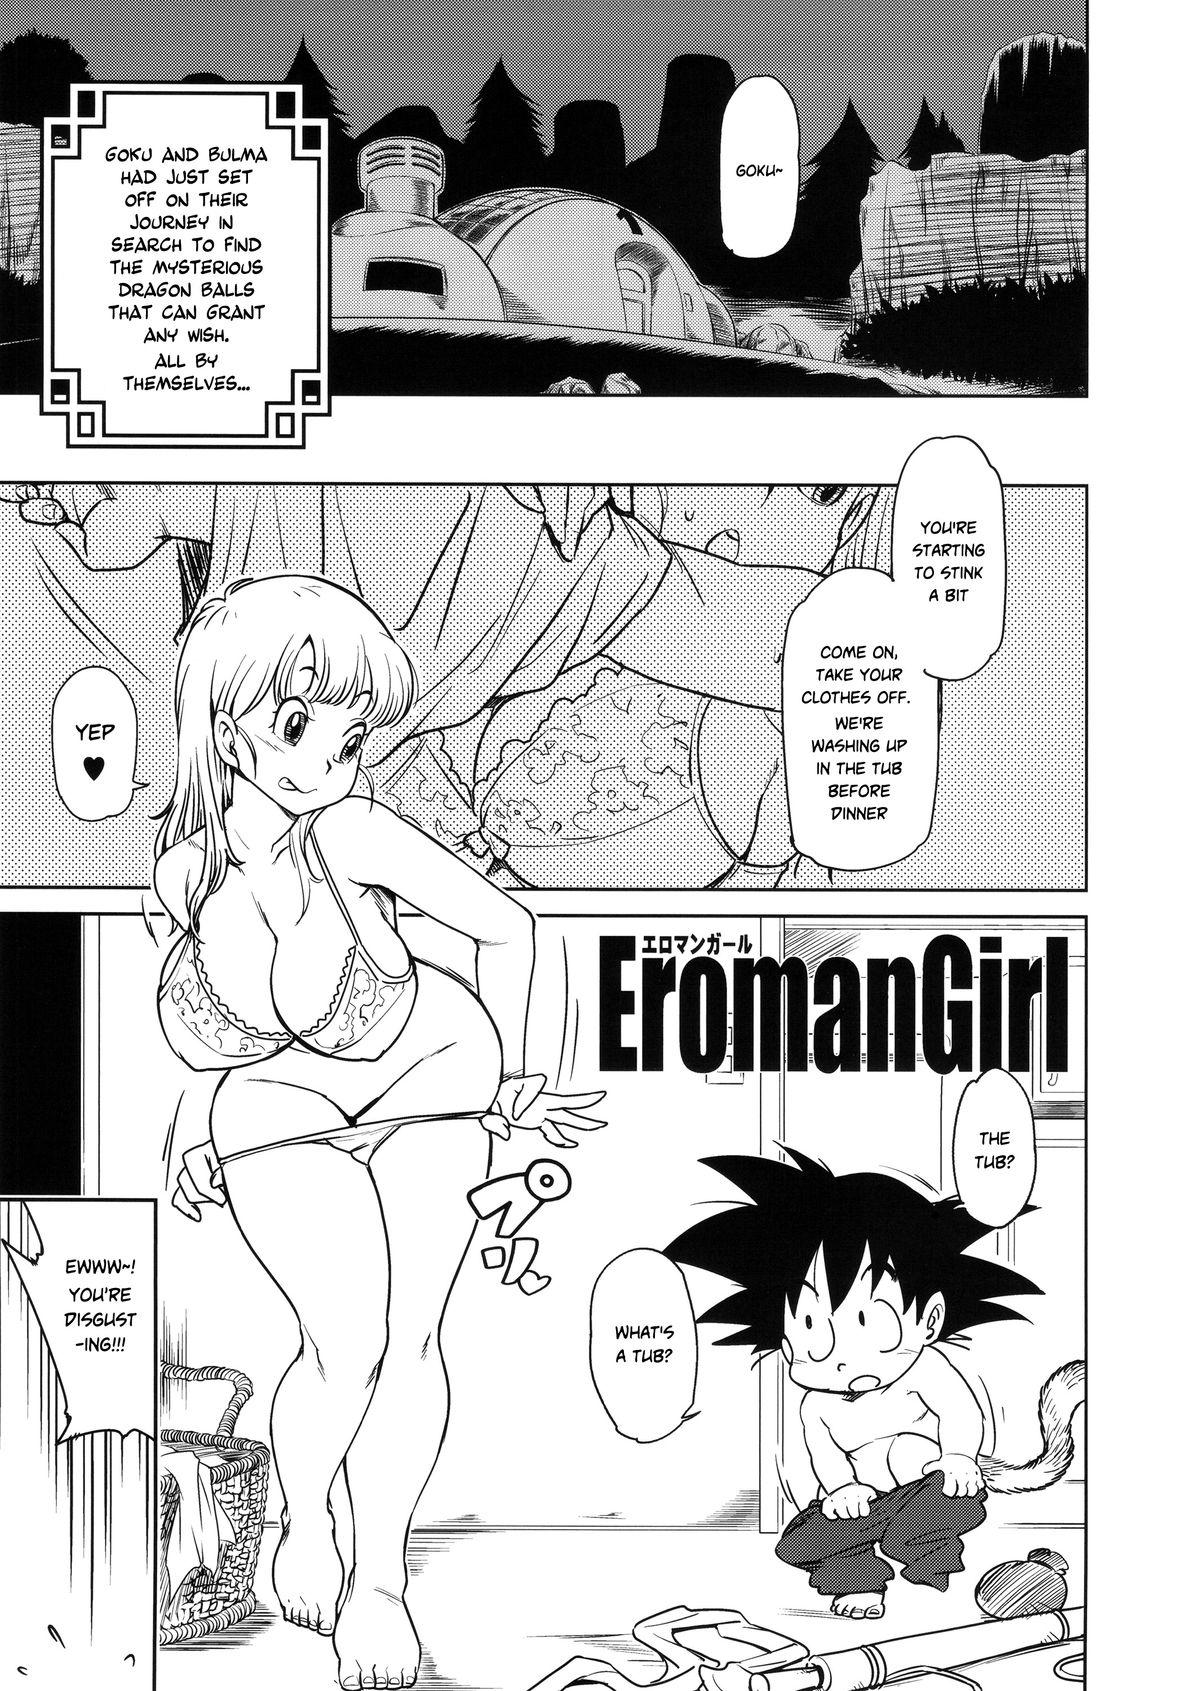 American Eromangirl - Dragon ball Breeding - Page 2